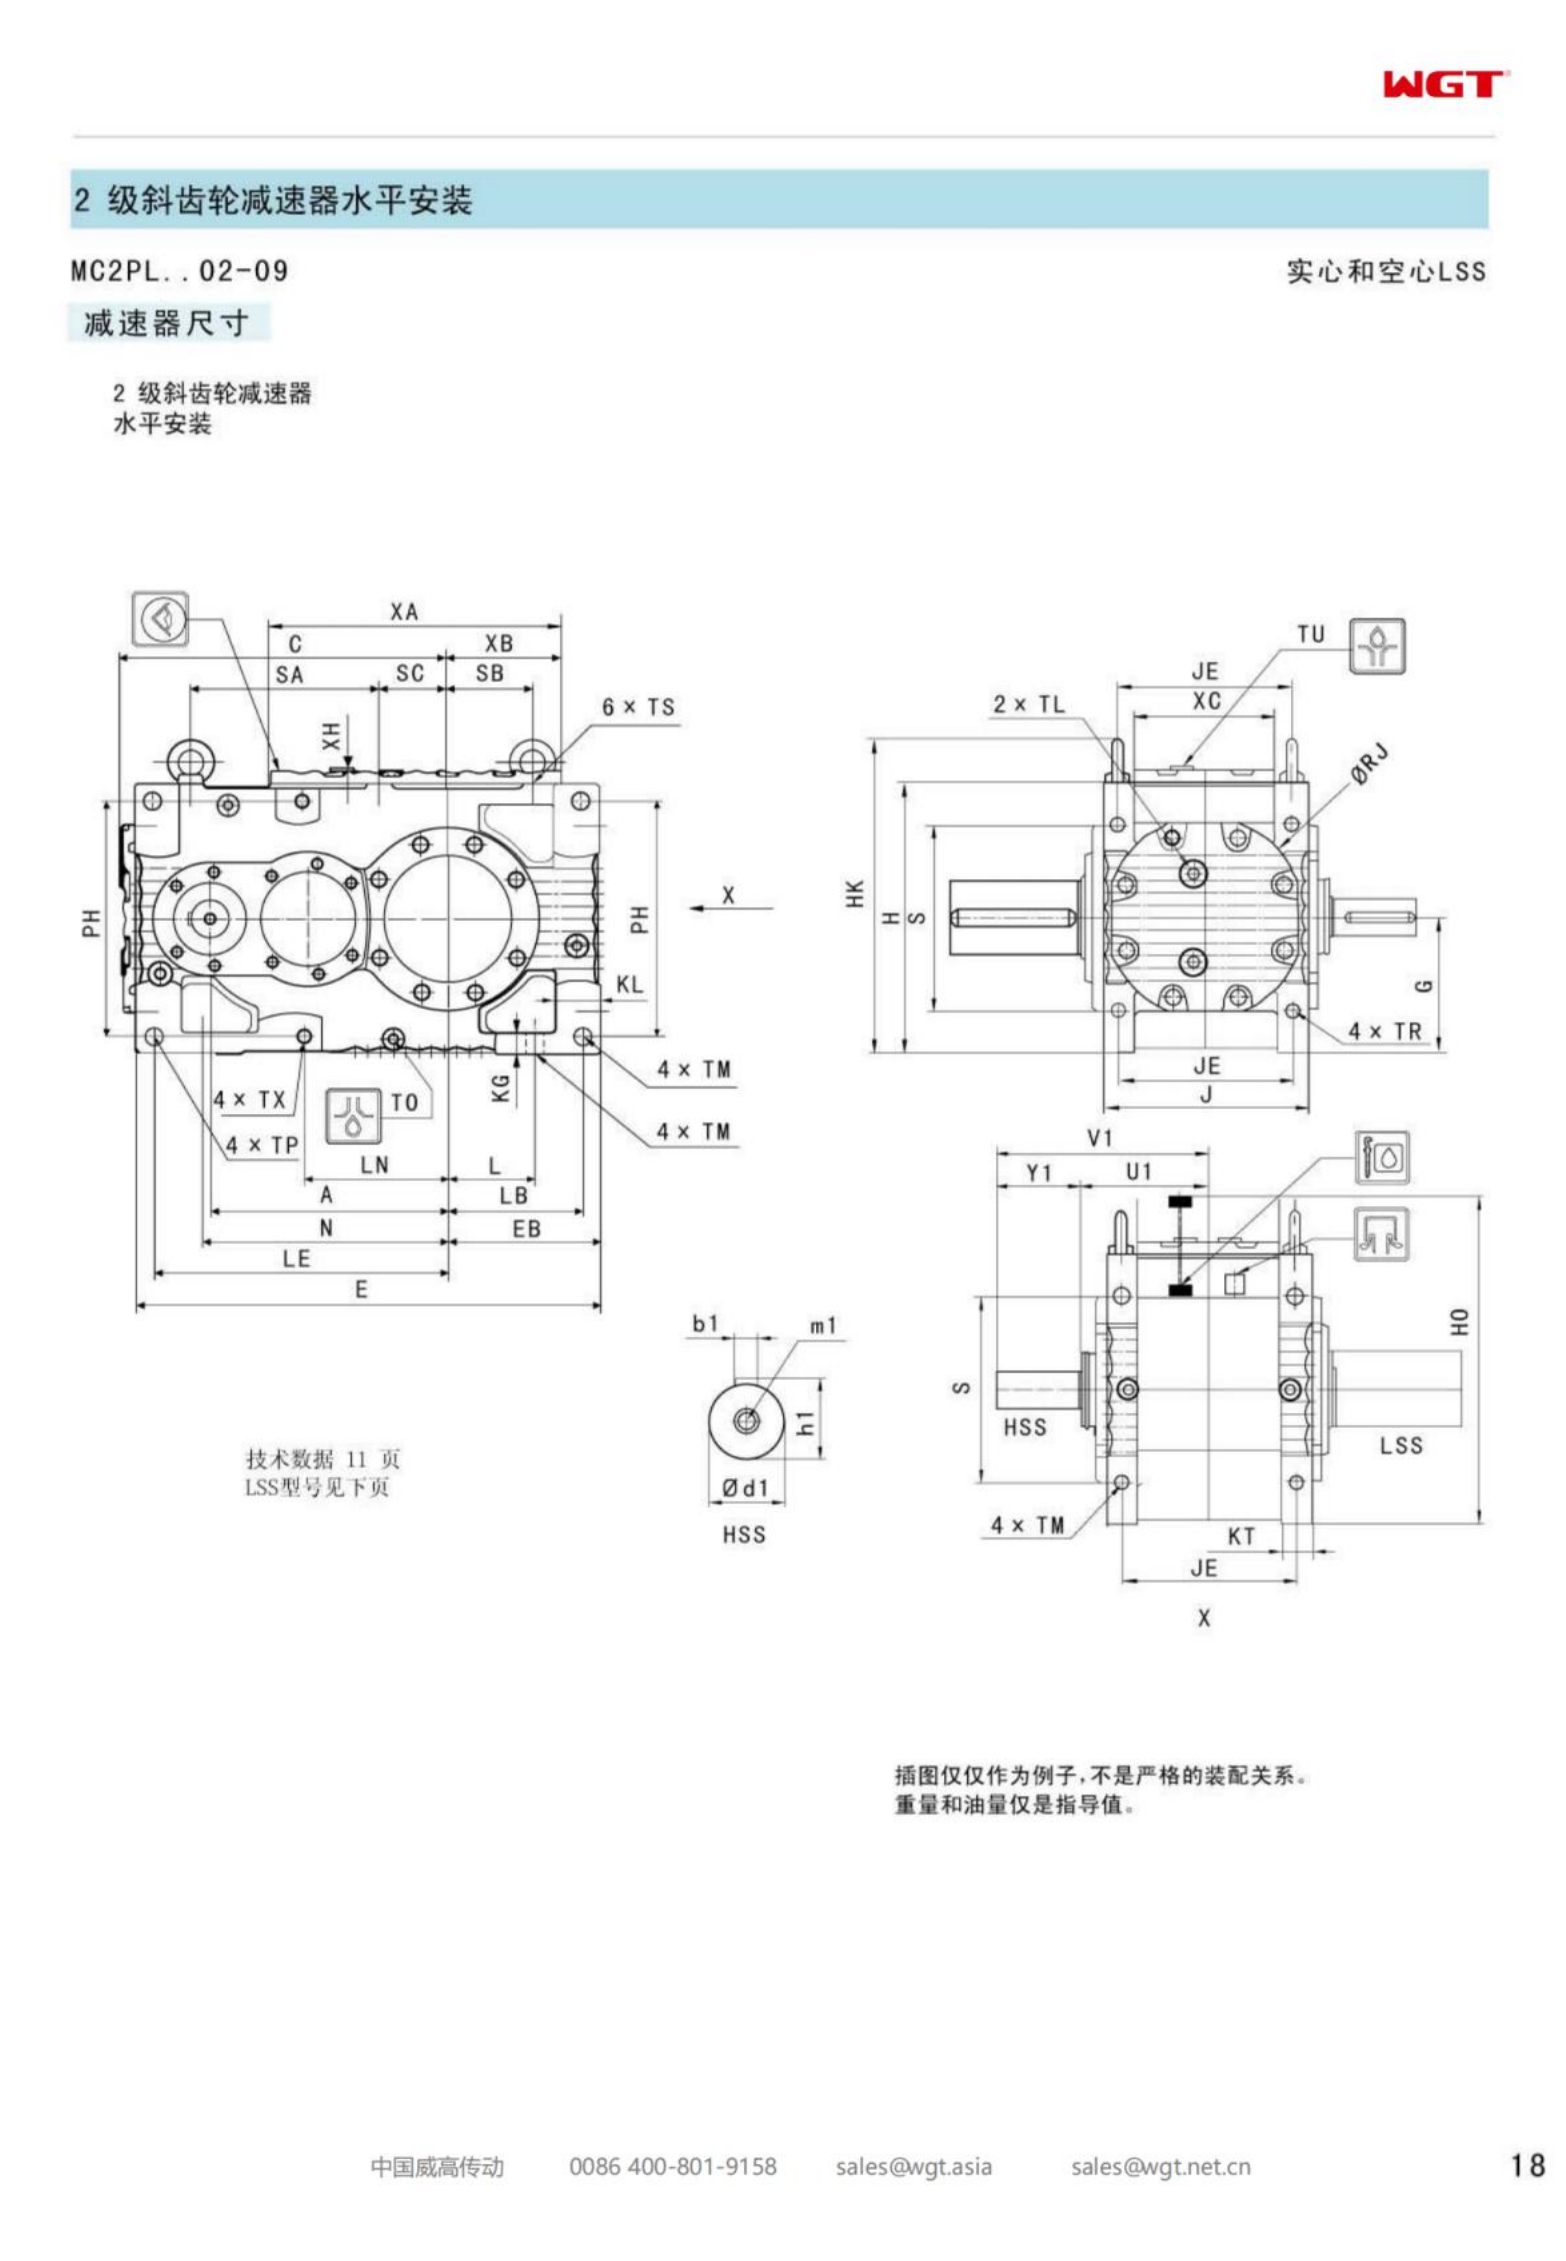 MC2PLST02 replaces _SEW_MC_Series gearbox (patent)